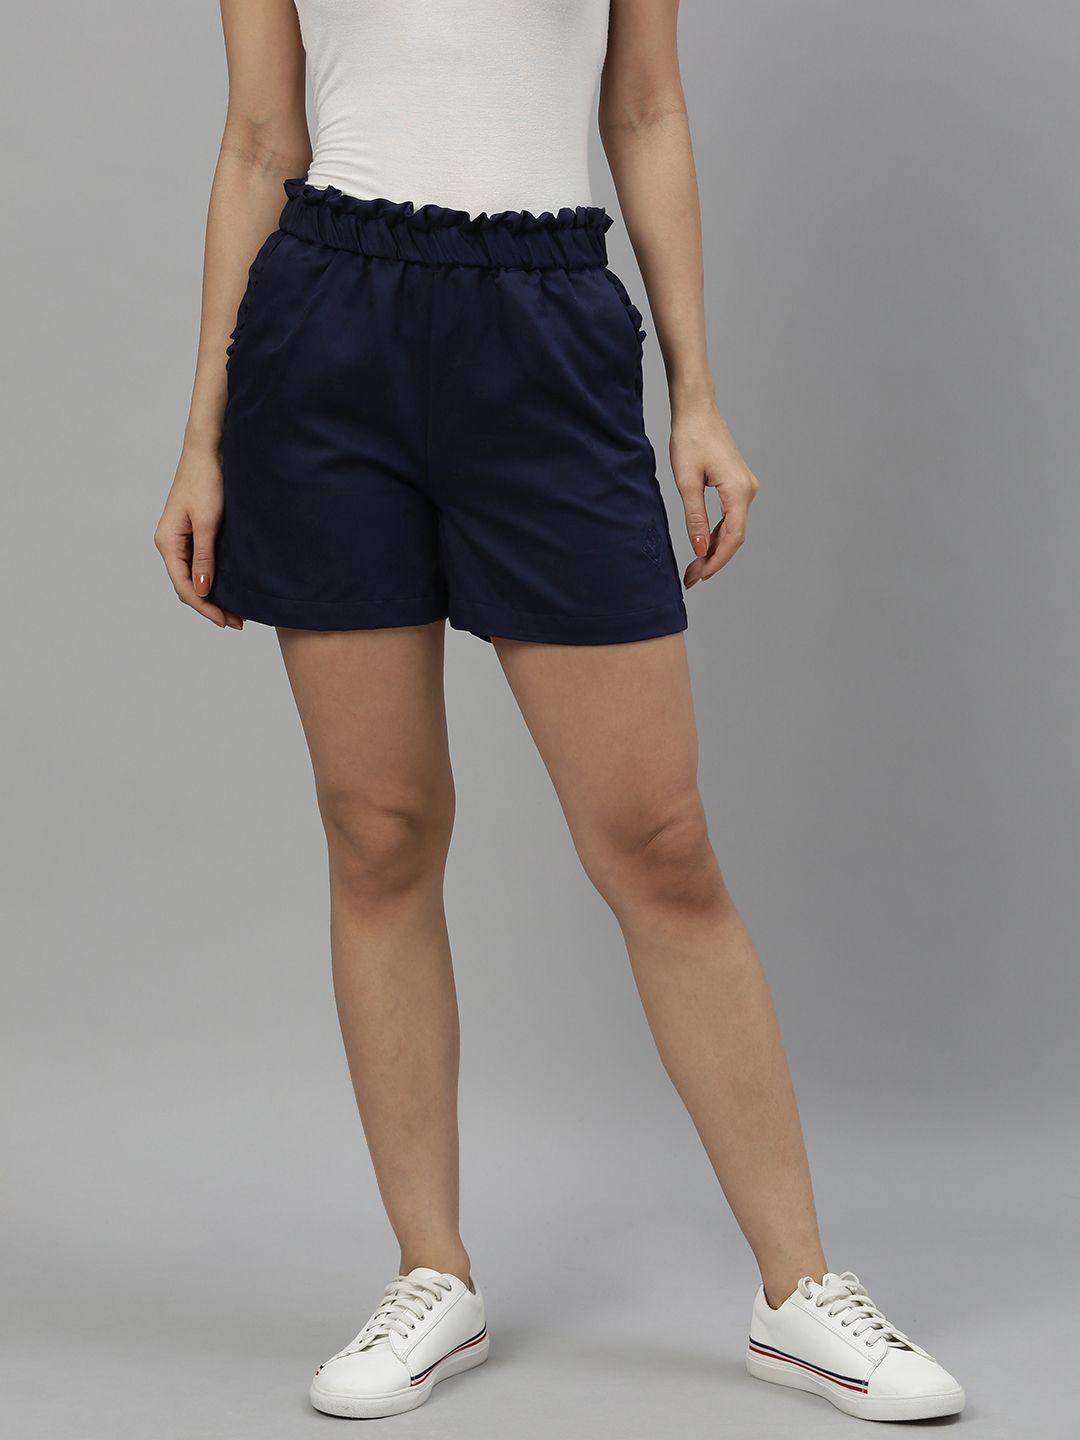 allen solly woman women navy blue solid regular shorts